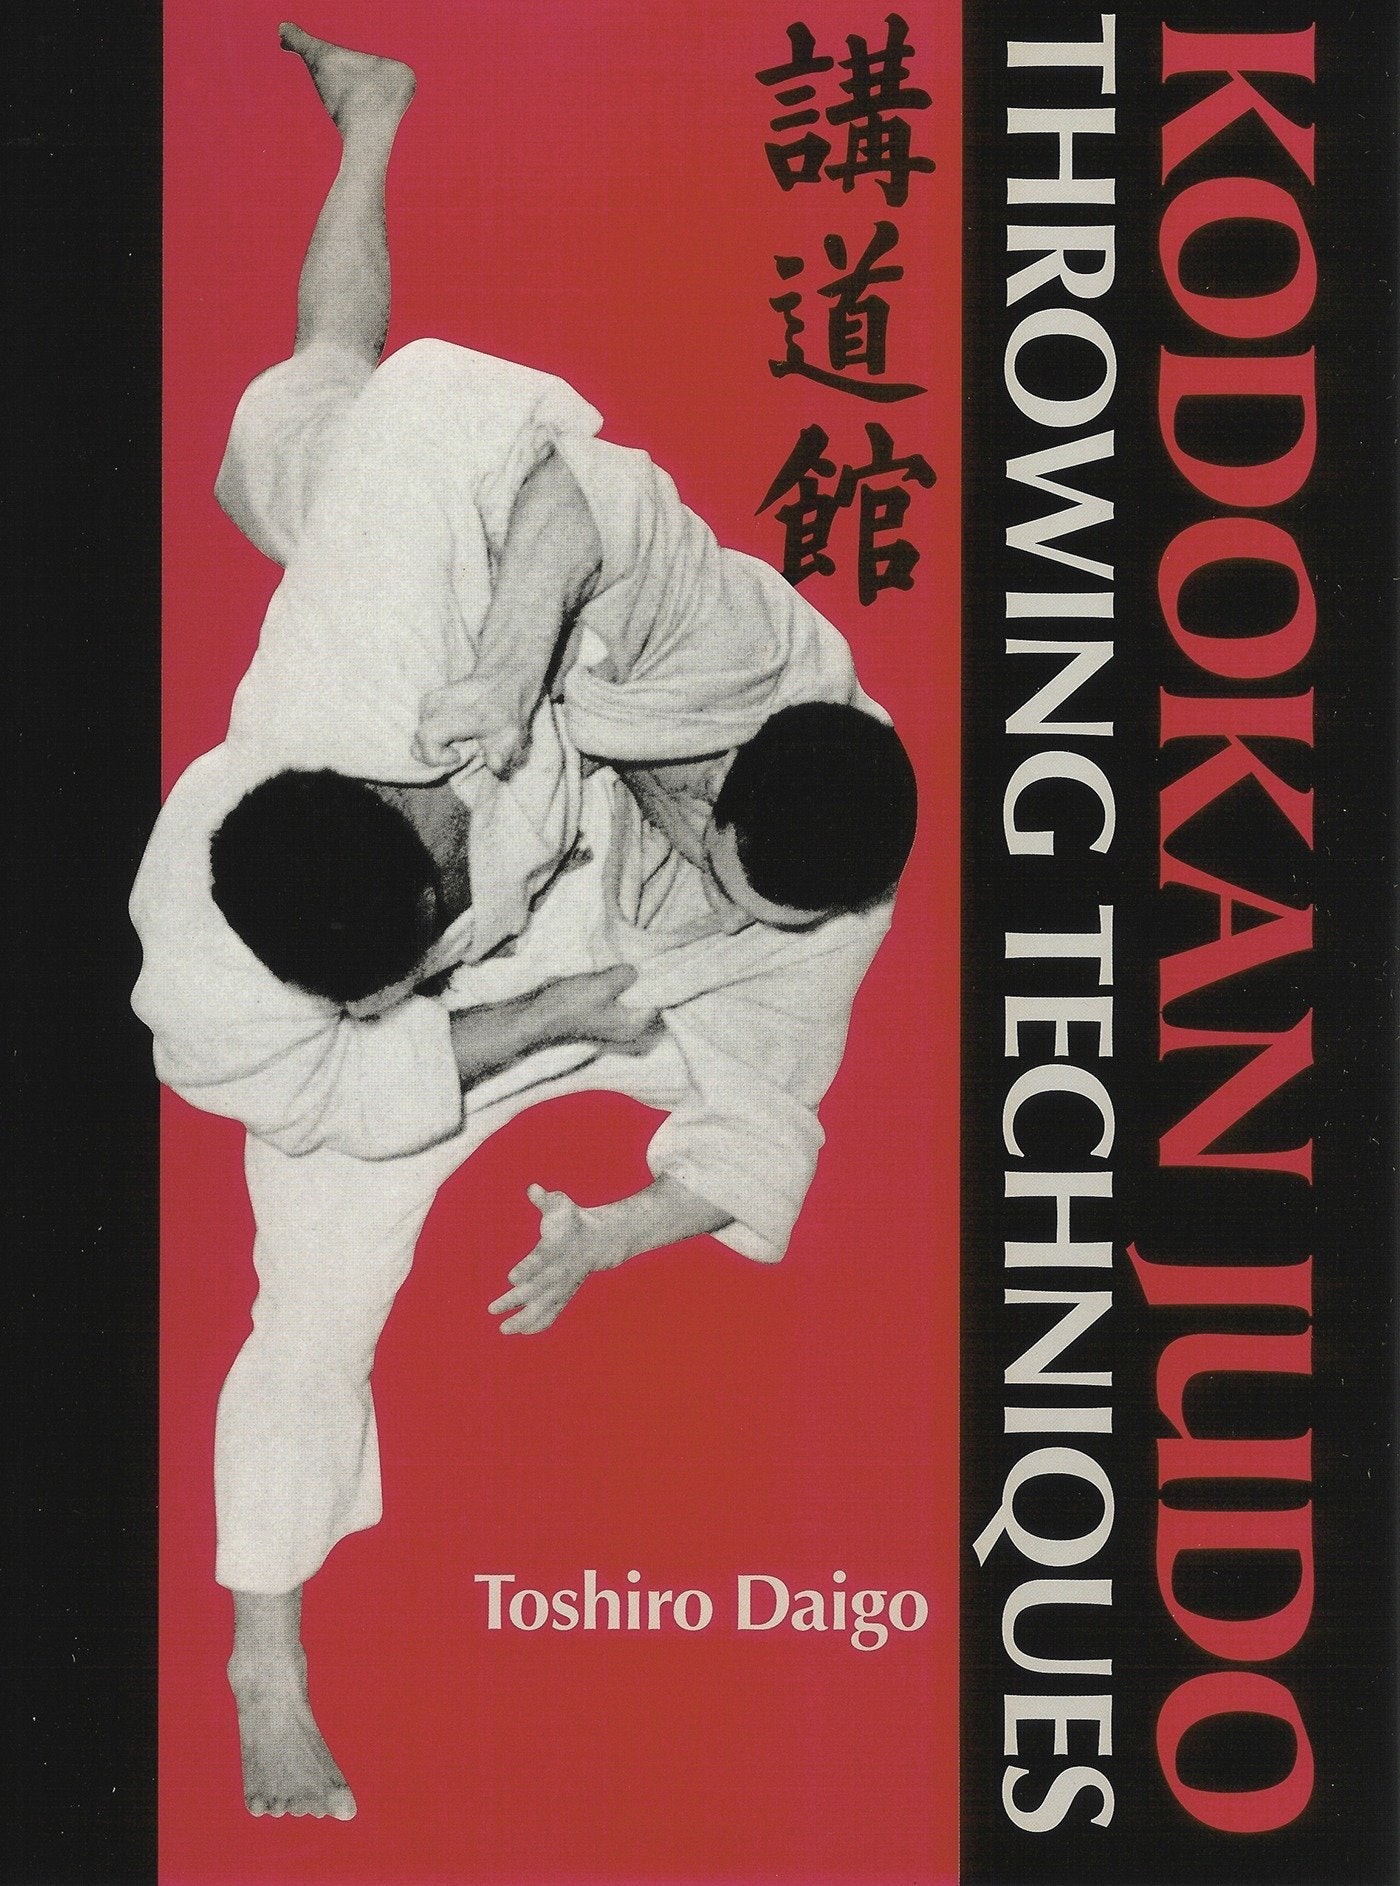 Kodokan Judo Throwing Techniques Book by Toshiro Daigo (Hardcover) - Budovideos Inc